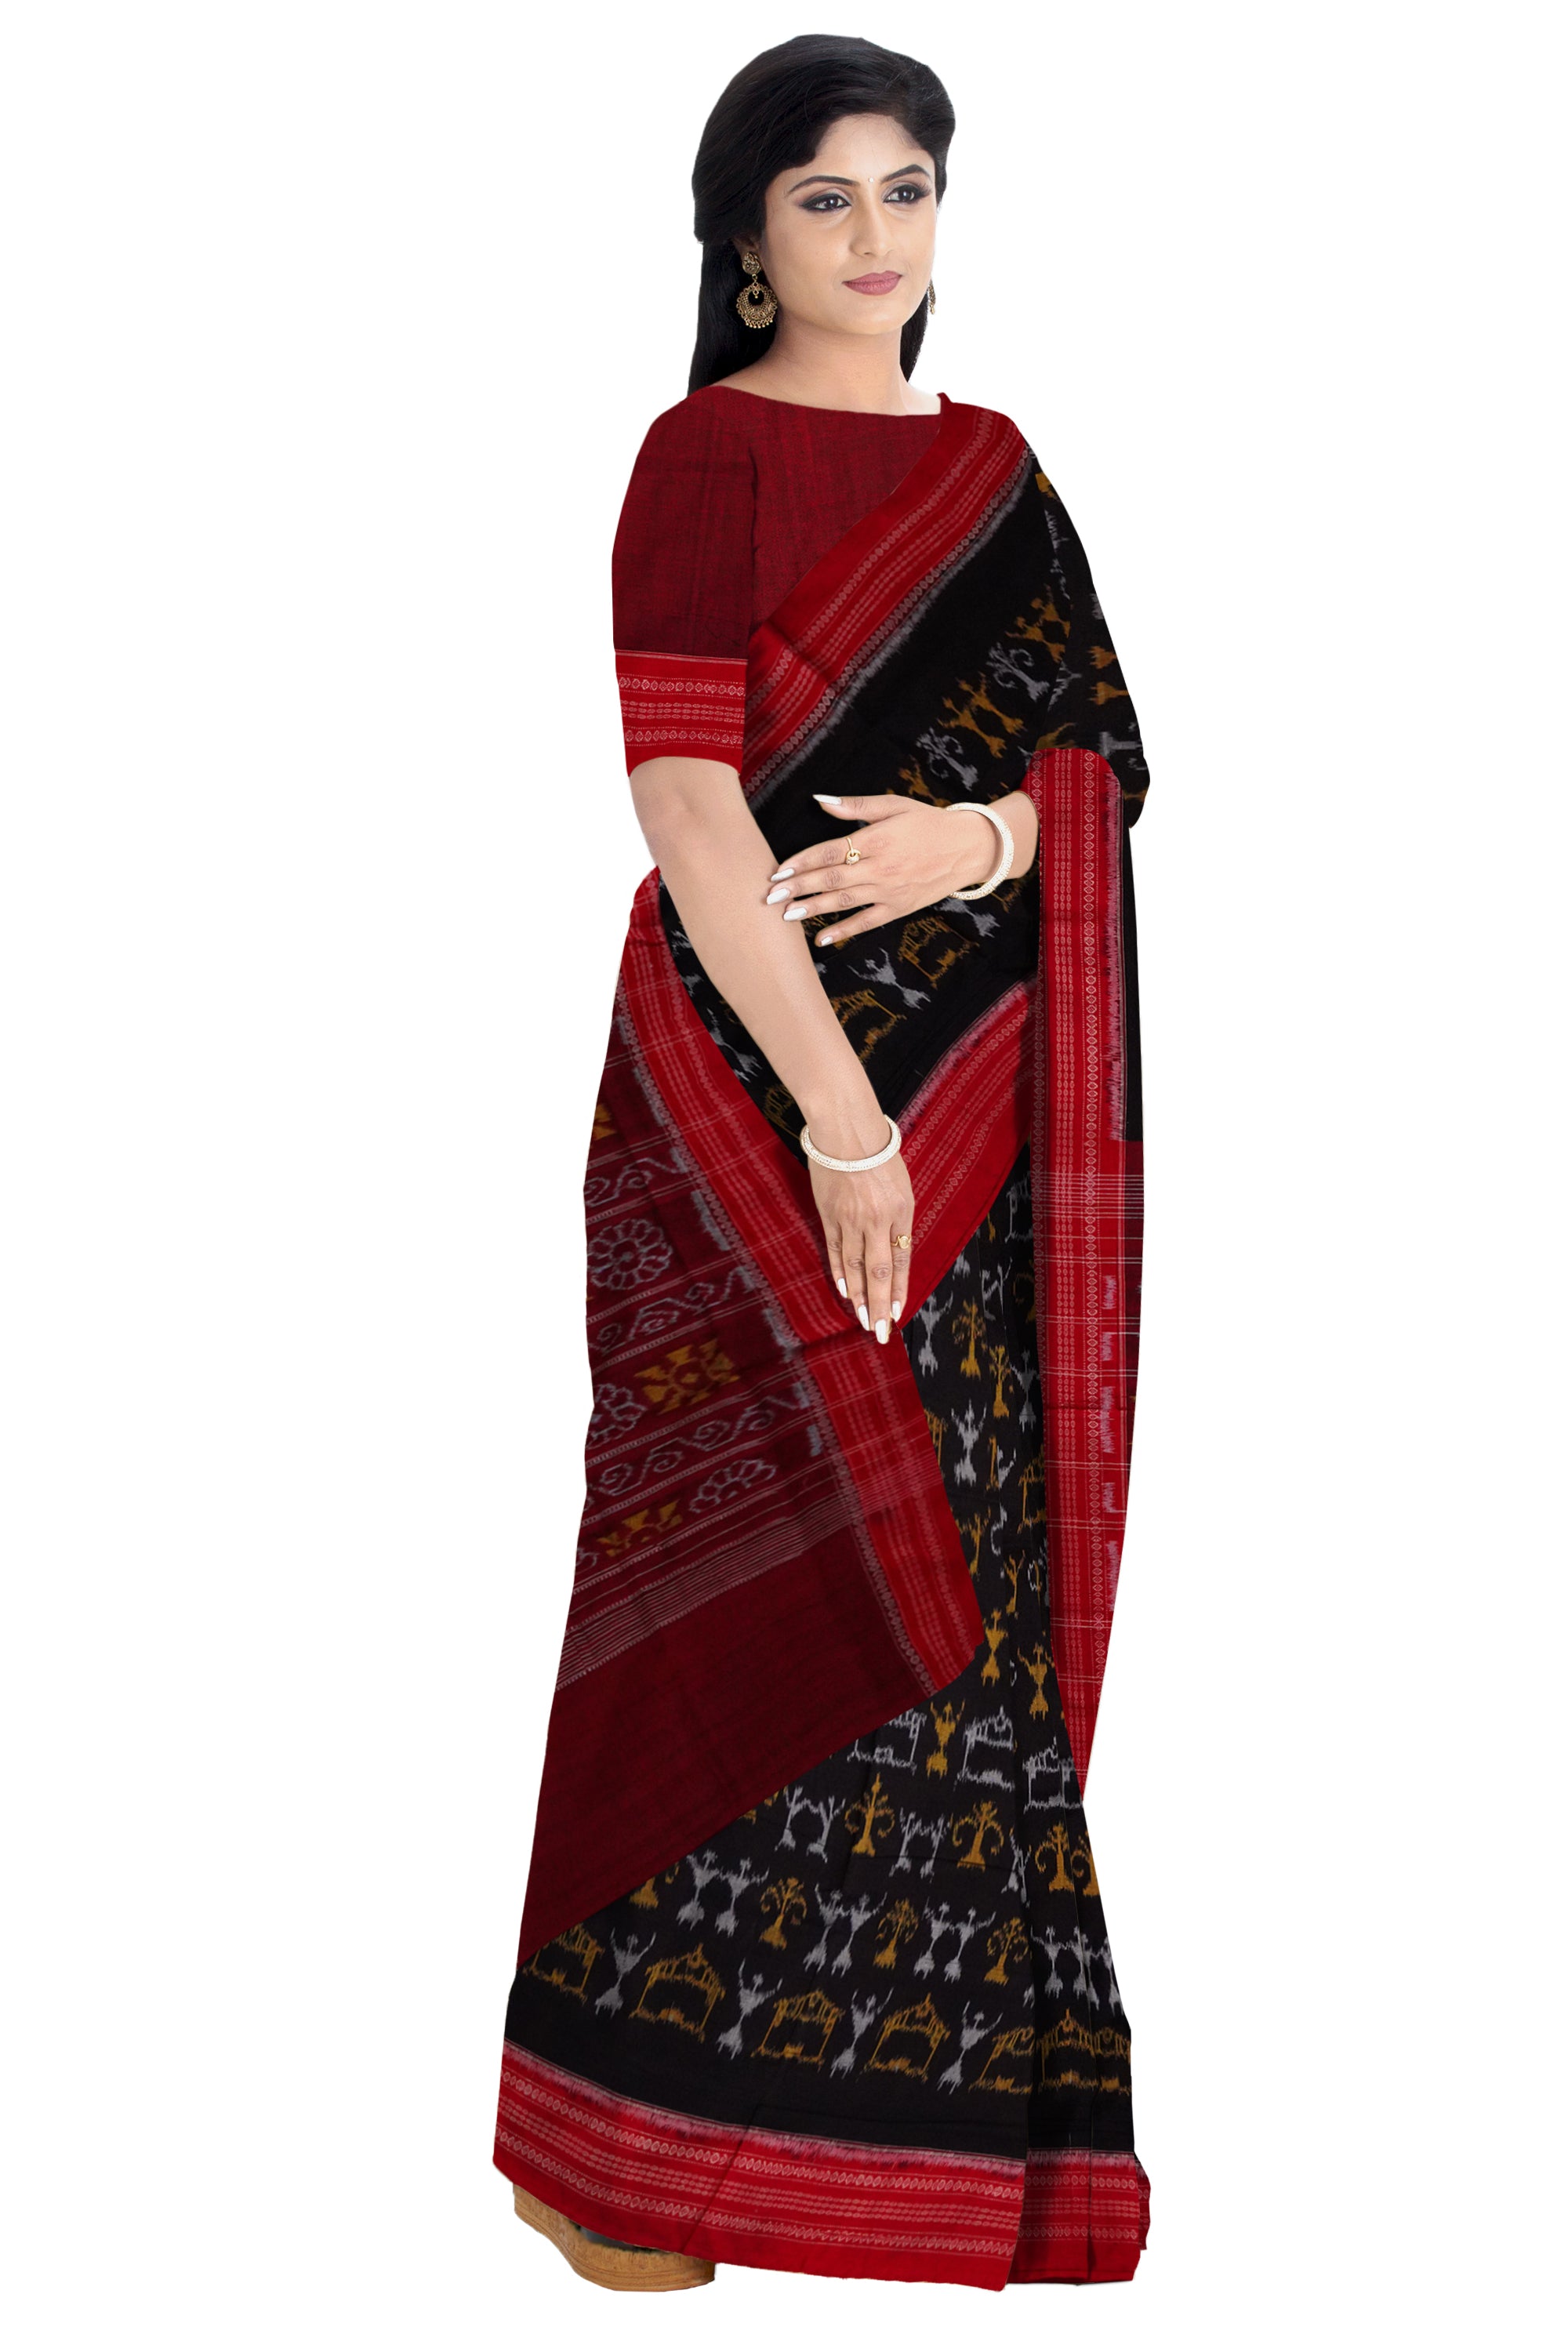 Black and maroon color whole body terracotta pattern pure Sambalpuri cotton saree. - Koshali Arts & Crafts Enterprise